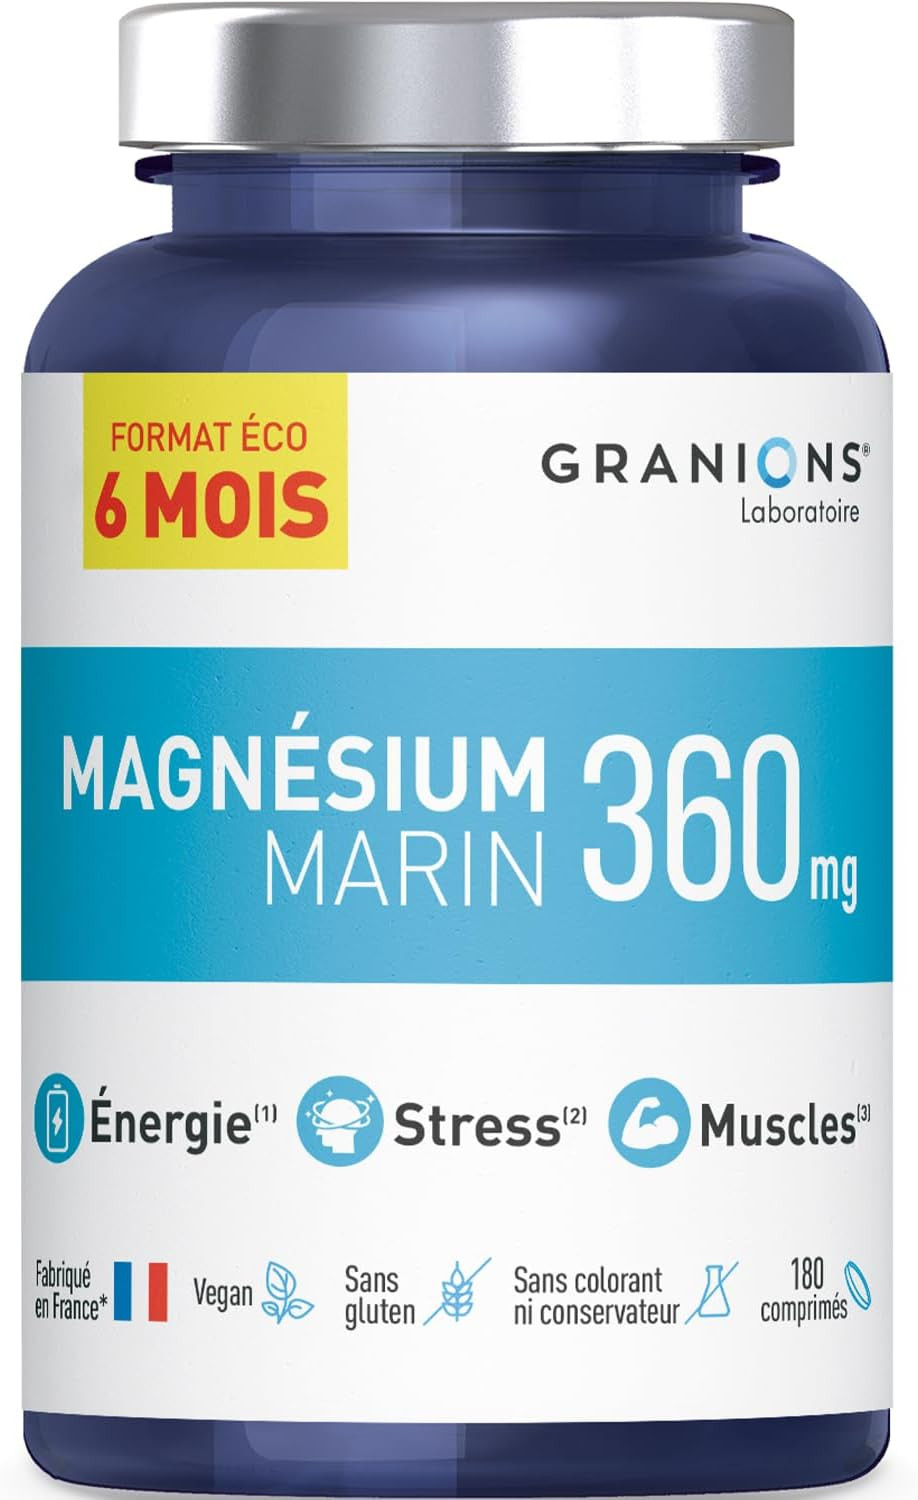 Granions double magnésium 360 mg- 180 comprimes (pack eco 6 mois) - GRANIONS